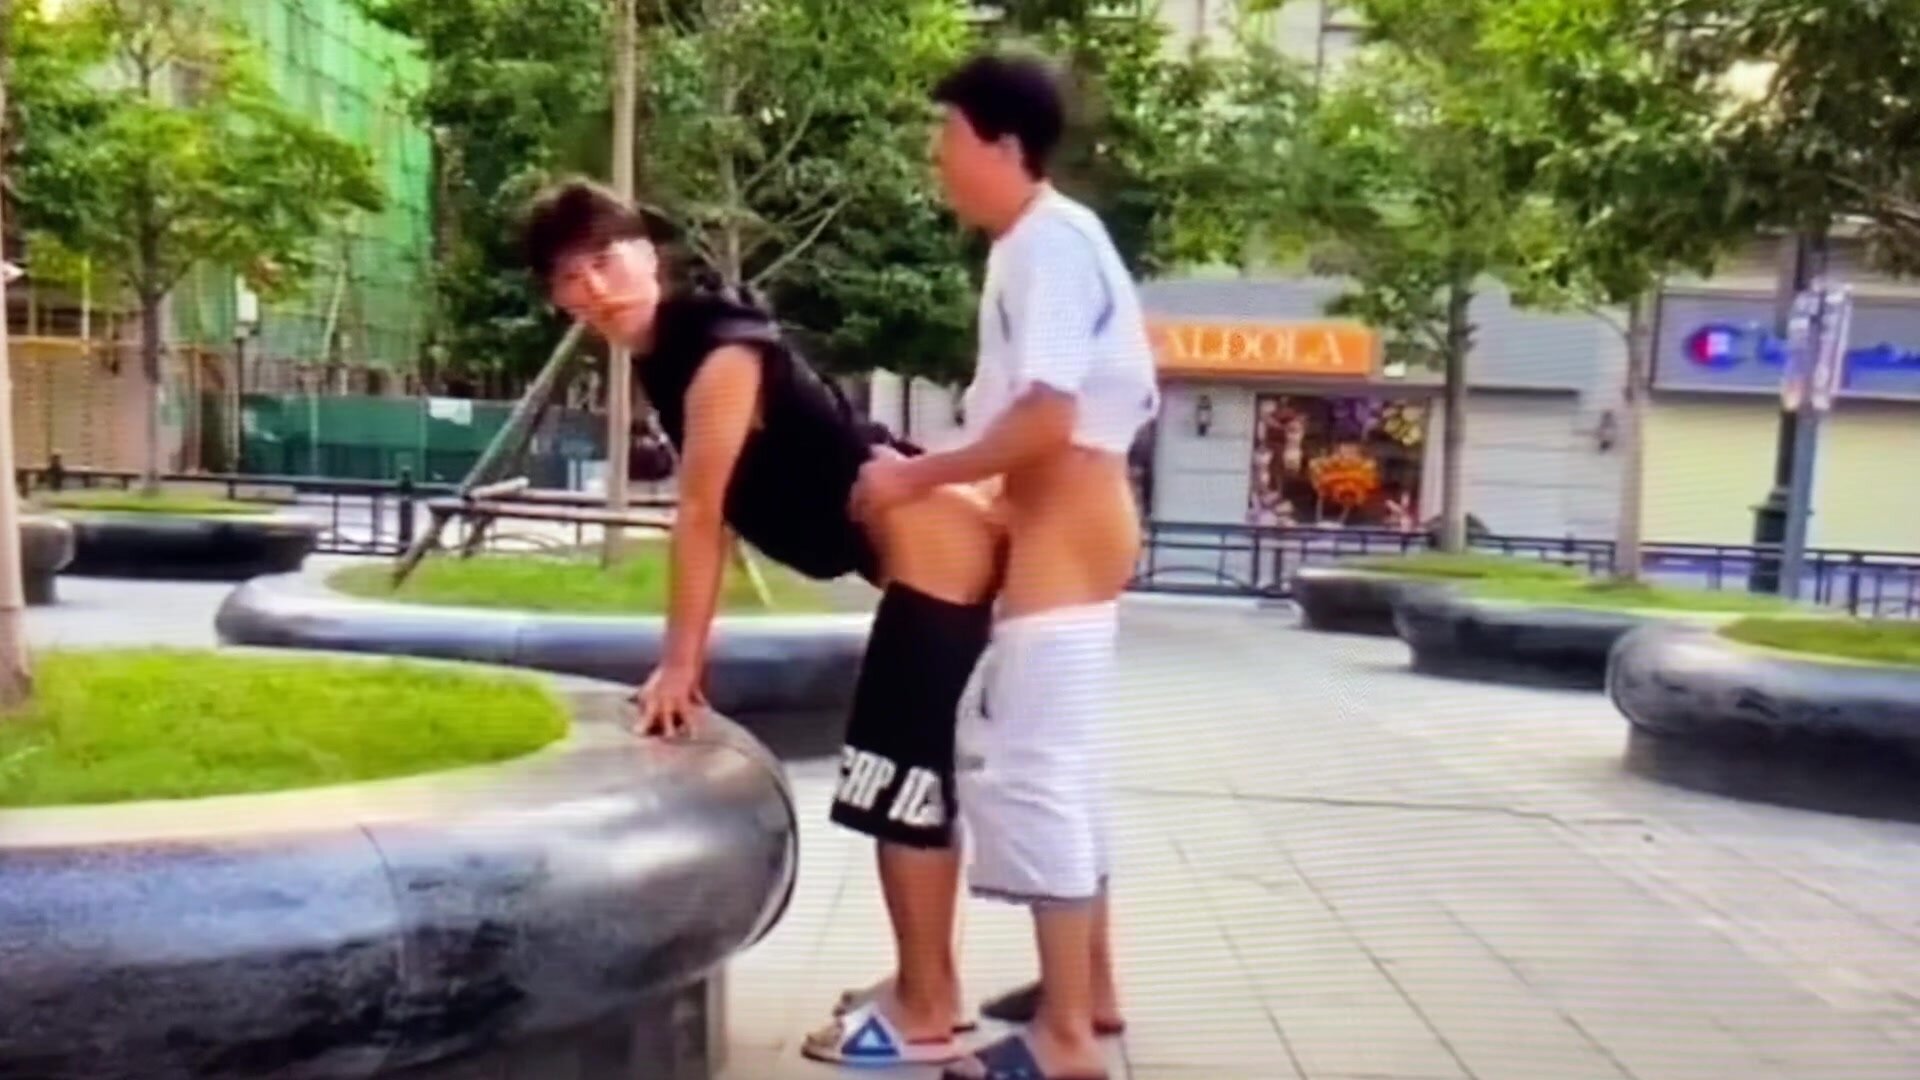 中国人在公园用力操。baise chinoise au parc.